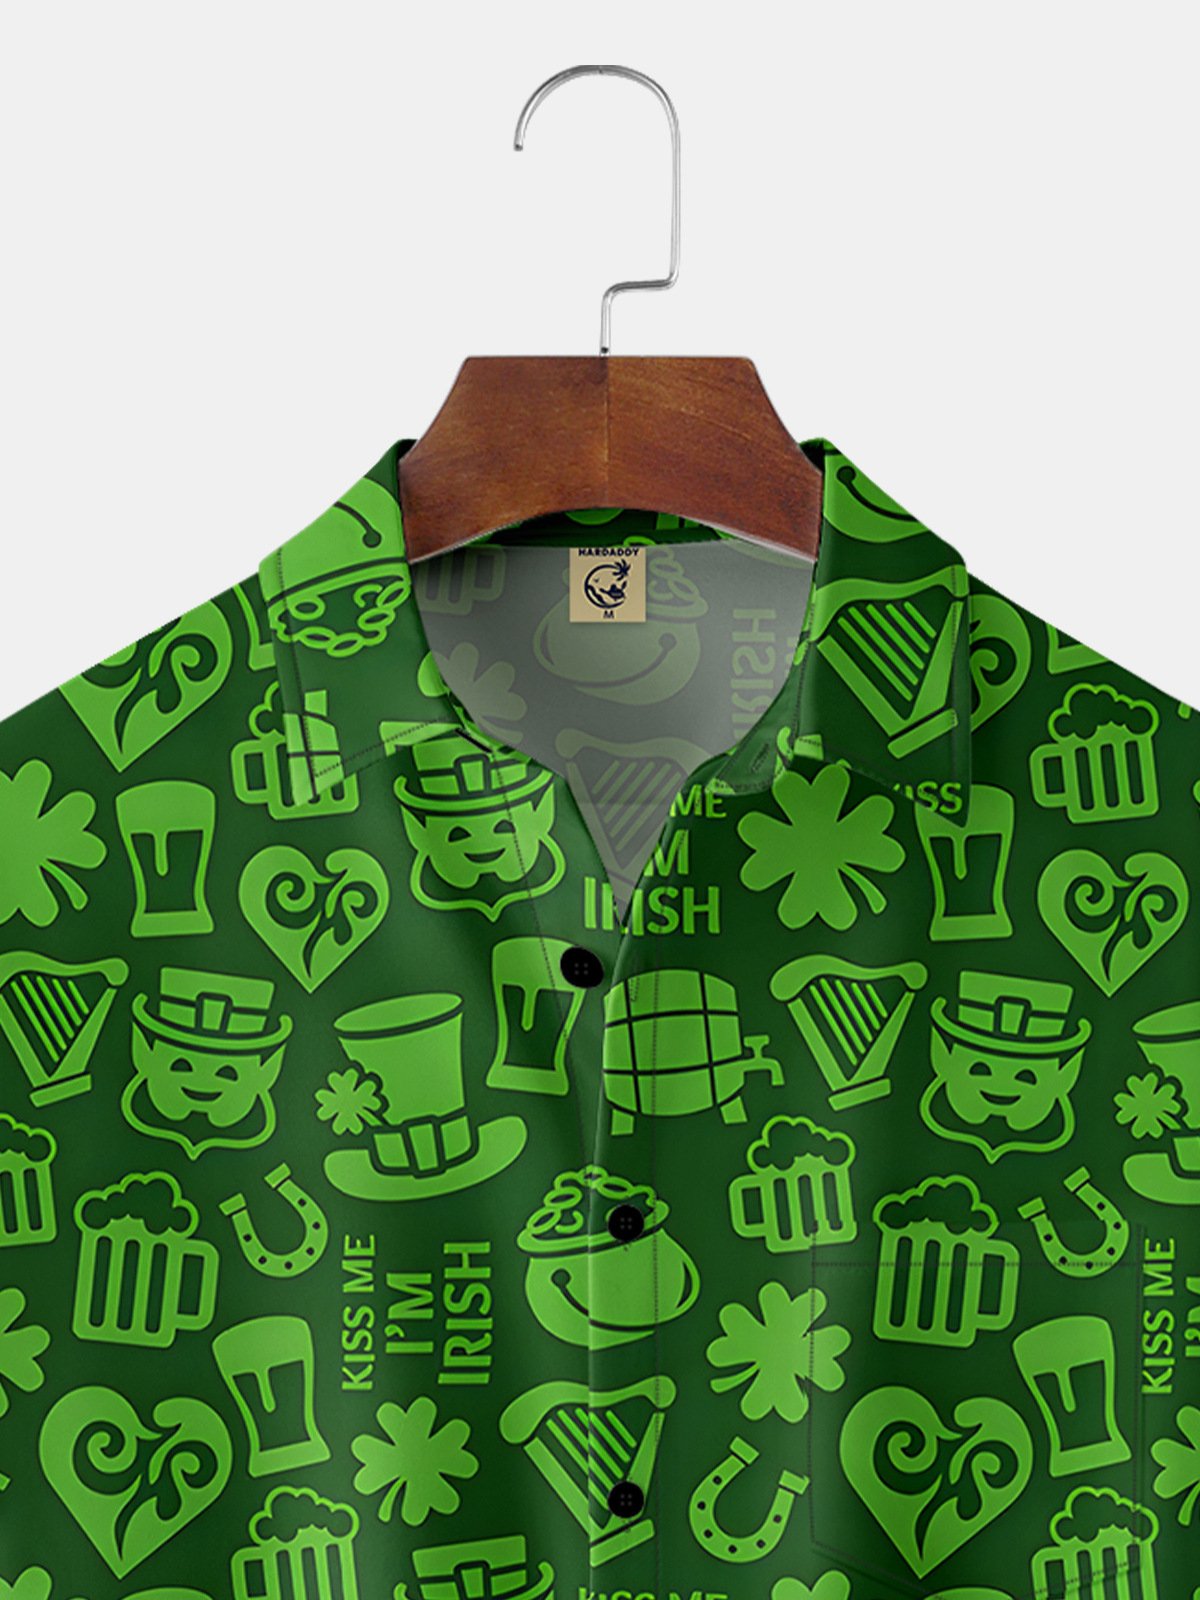 Hardaddy Hawaiian Button Up Shirt for Men Green Irish St. Patrick's Day Lucky Clover Beer Regular Fit Short Sleeve Shirt St Paddy's Day Shirt